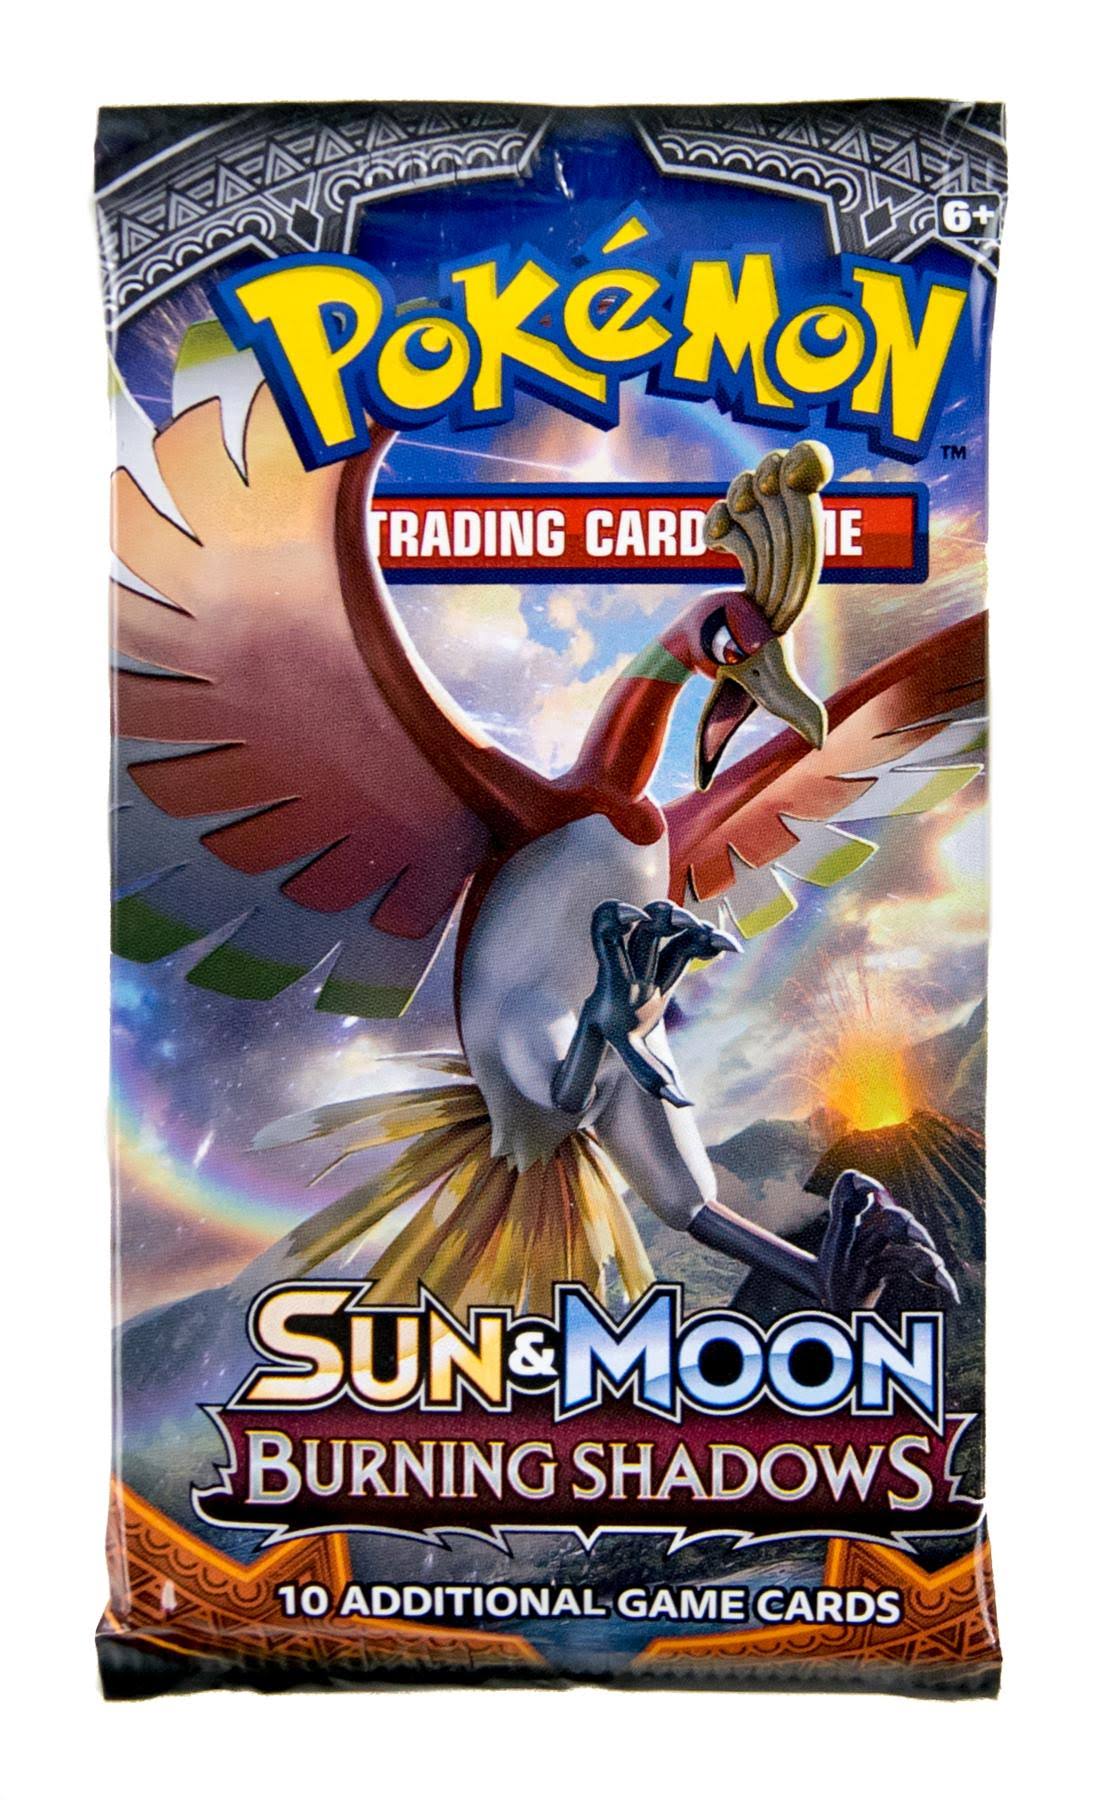 Pokemon Sun & Moon Burning Shadows Booster Pack